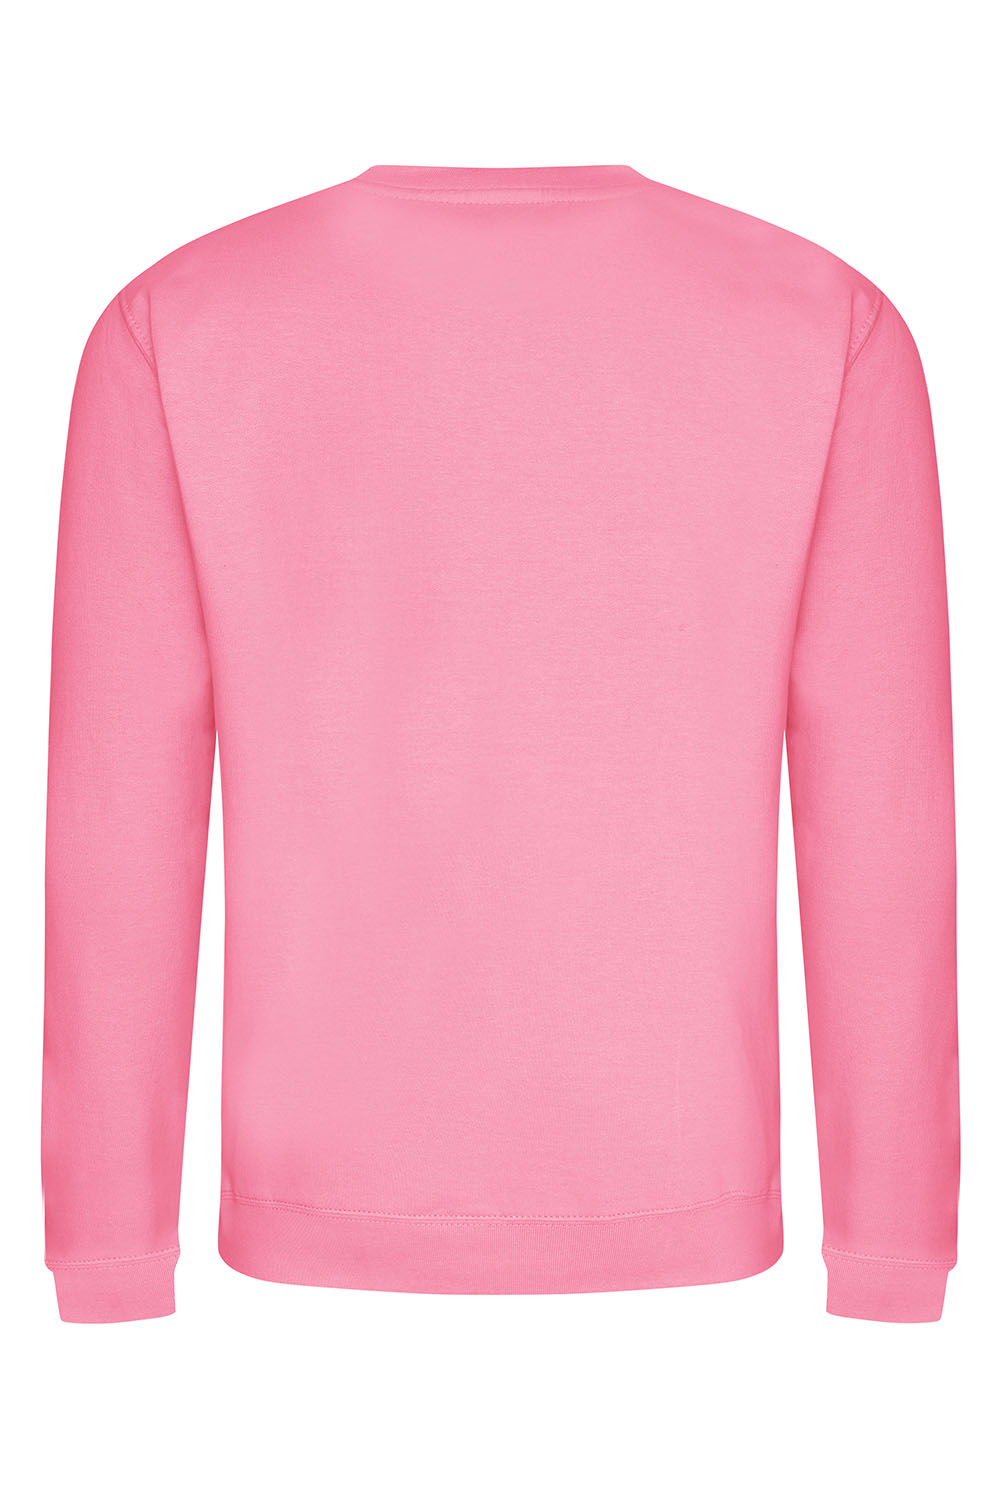 Plain Sweatshirt In Candy Floss Pink (Single)